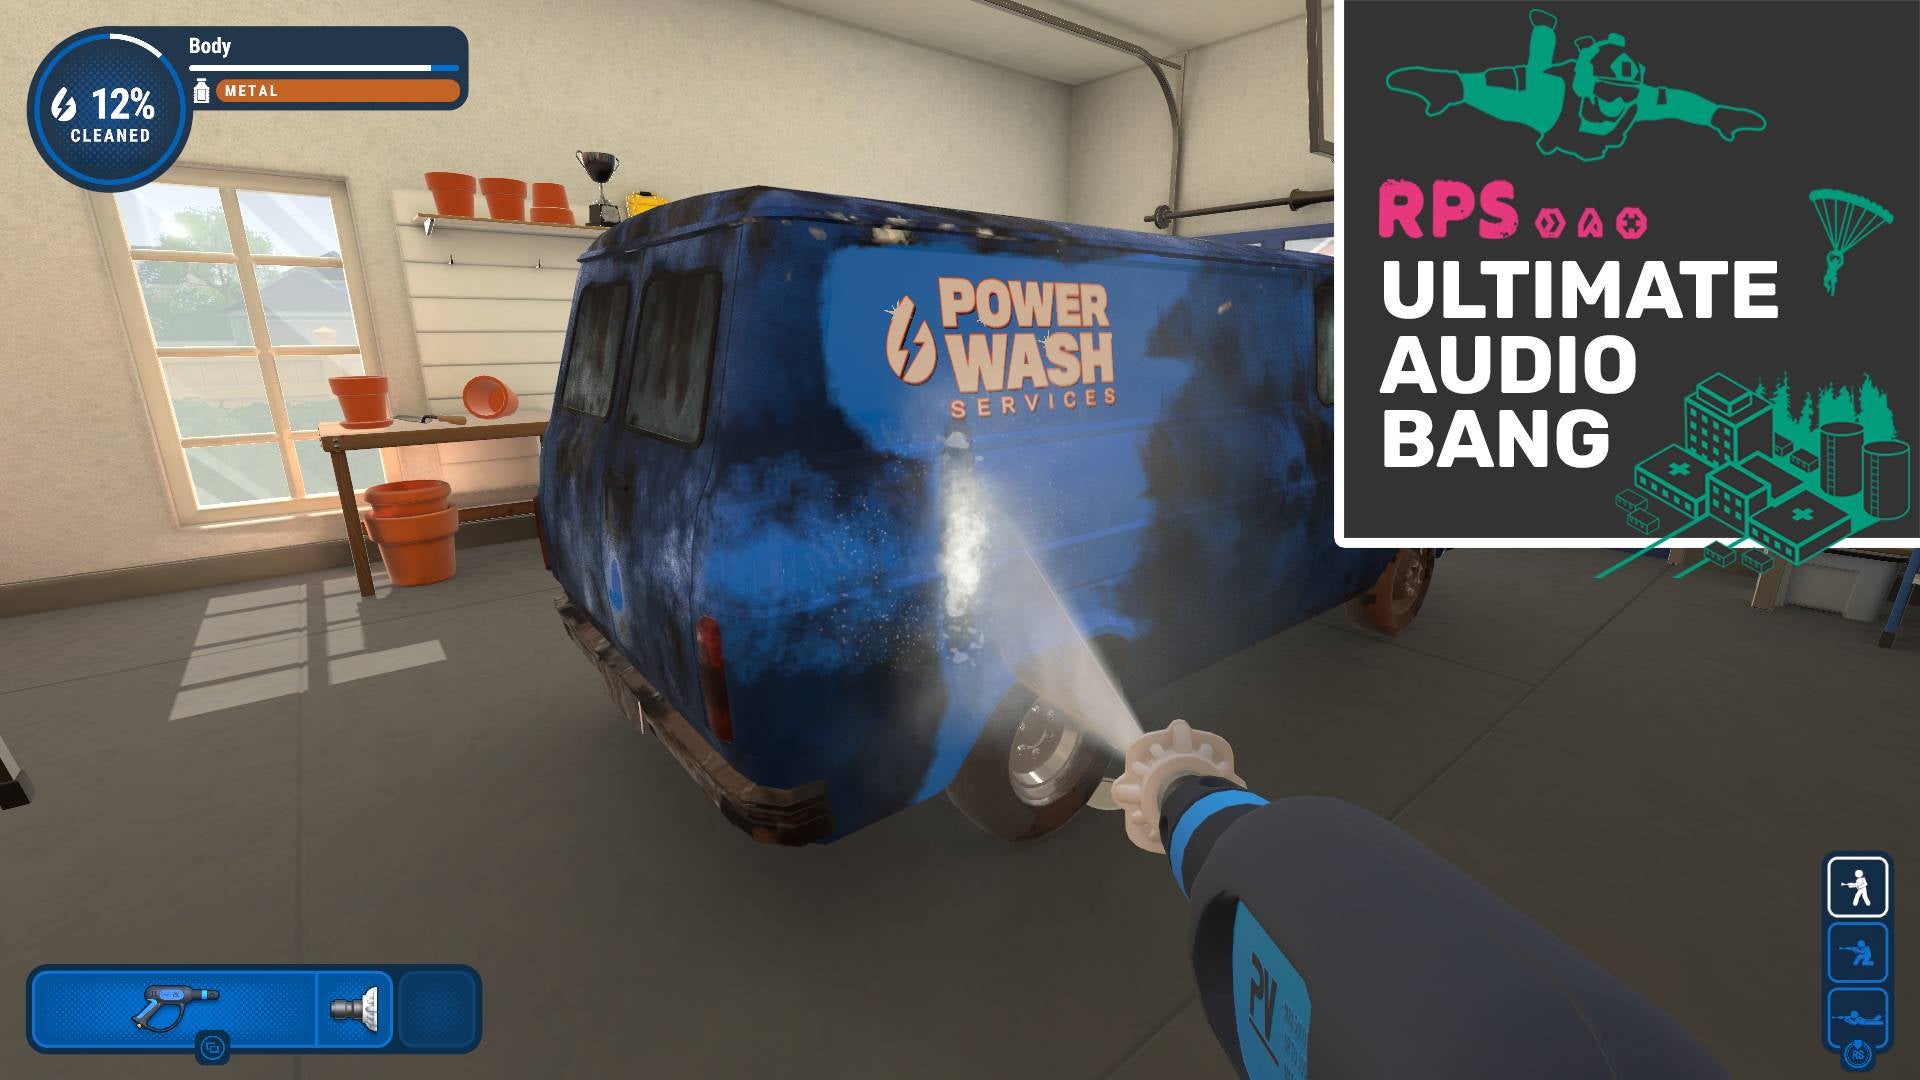 Powerwashing a powerwashing company van in a PowerWash Simulator screenshot, with added Ultimate Audio Bang logo in the top right.